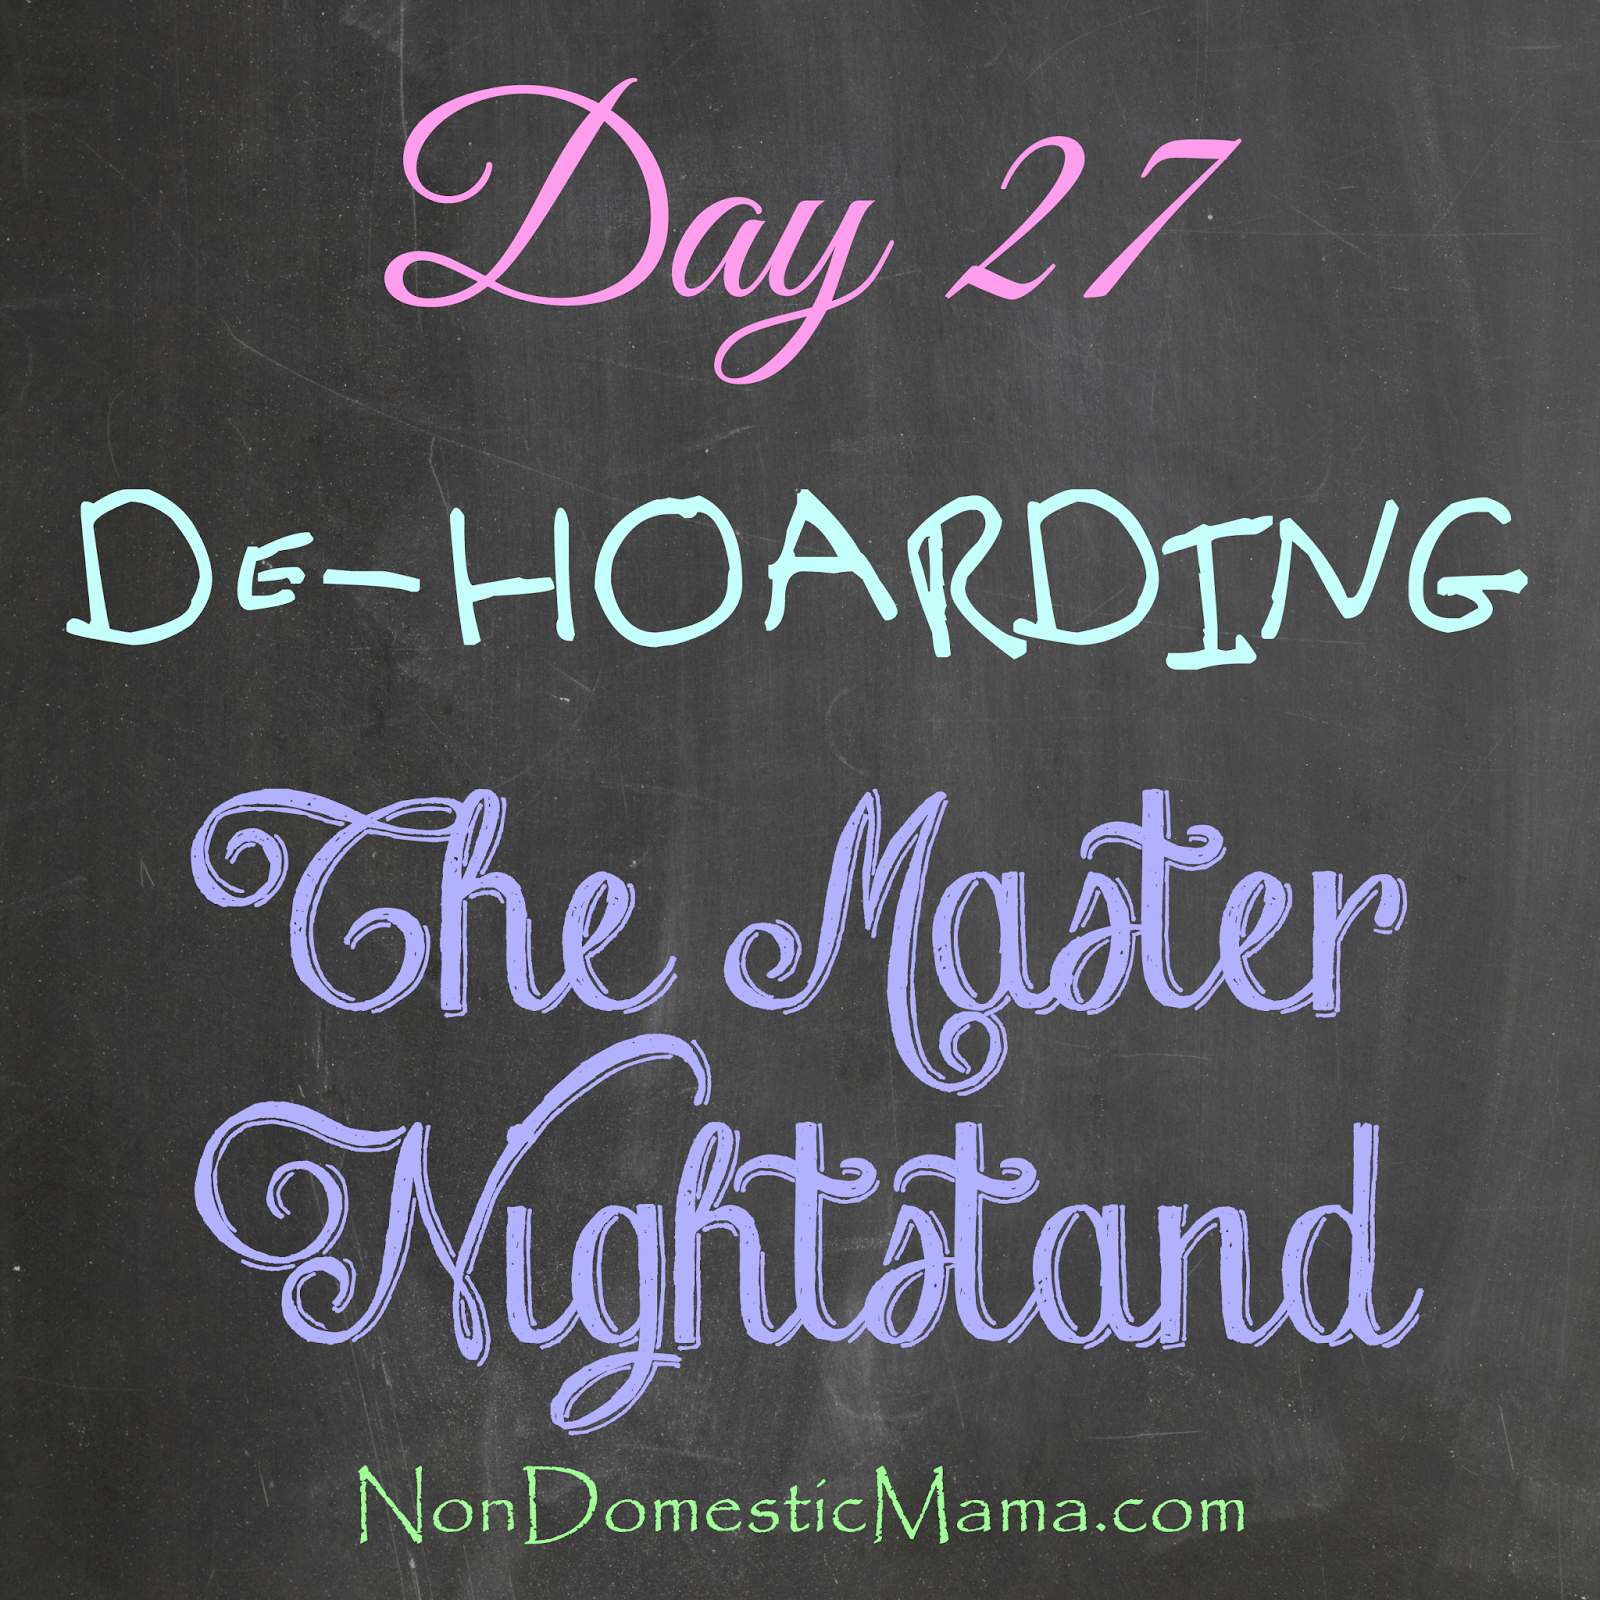 {Day 27} Nightstand - 31 Days of De-Hoarding #write31days #dehoarding